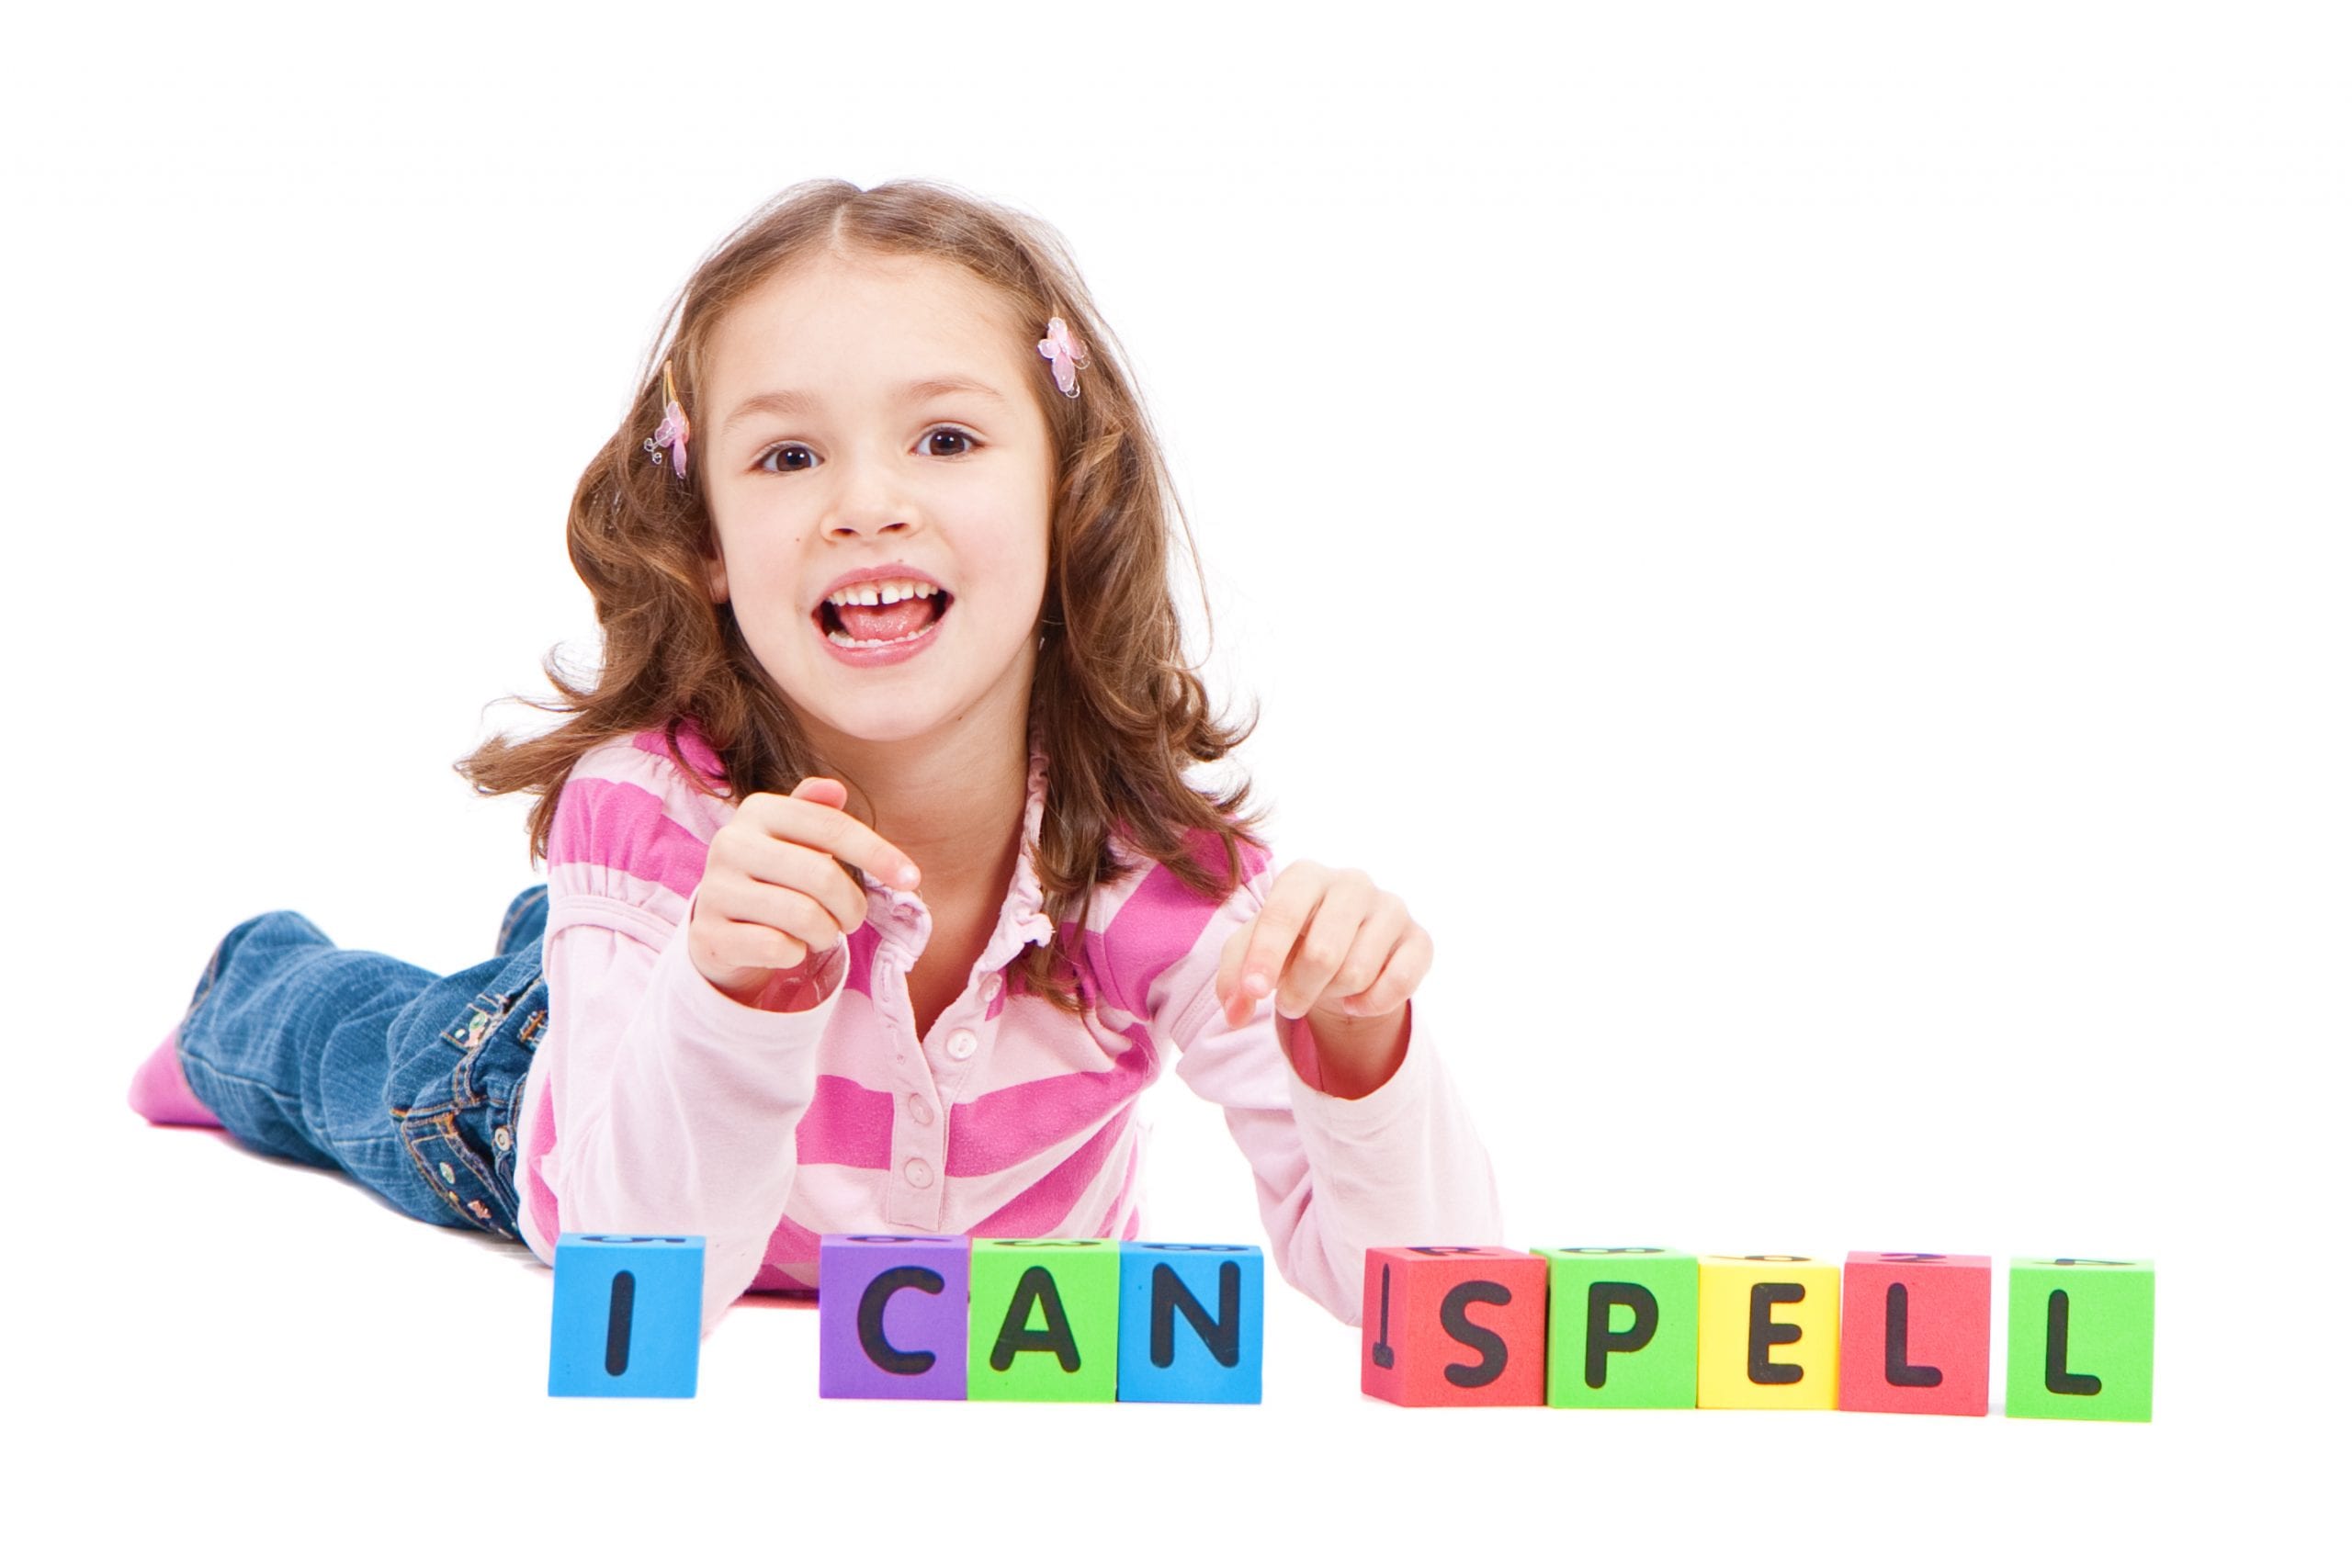 A little girl spelling with letter blocks